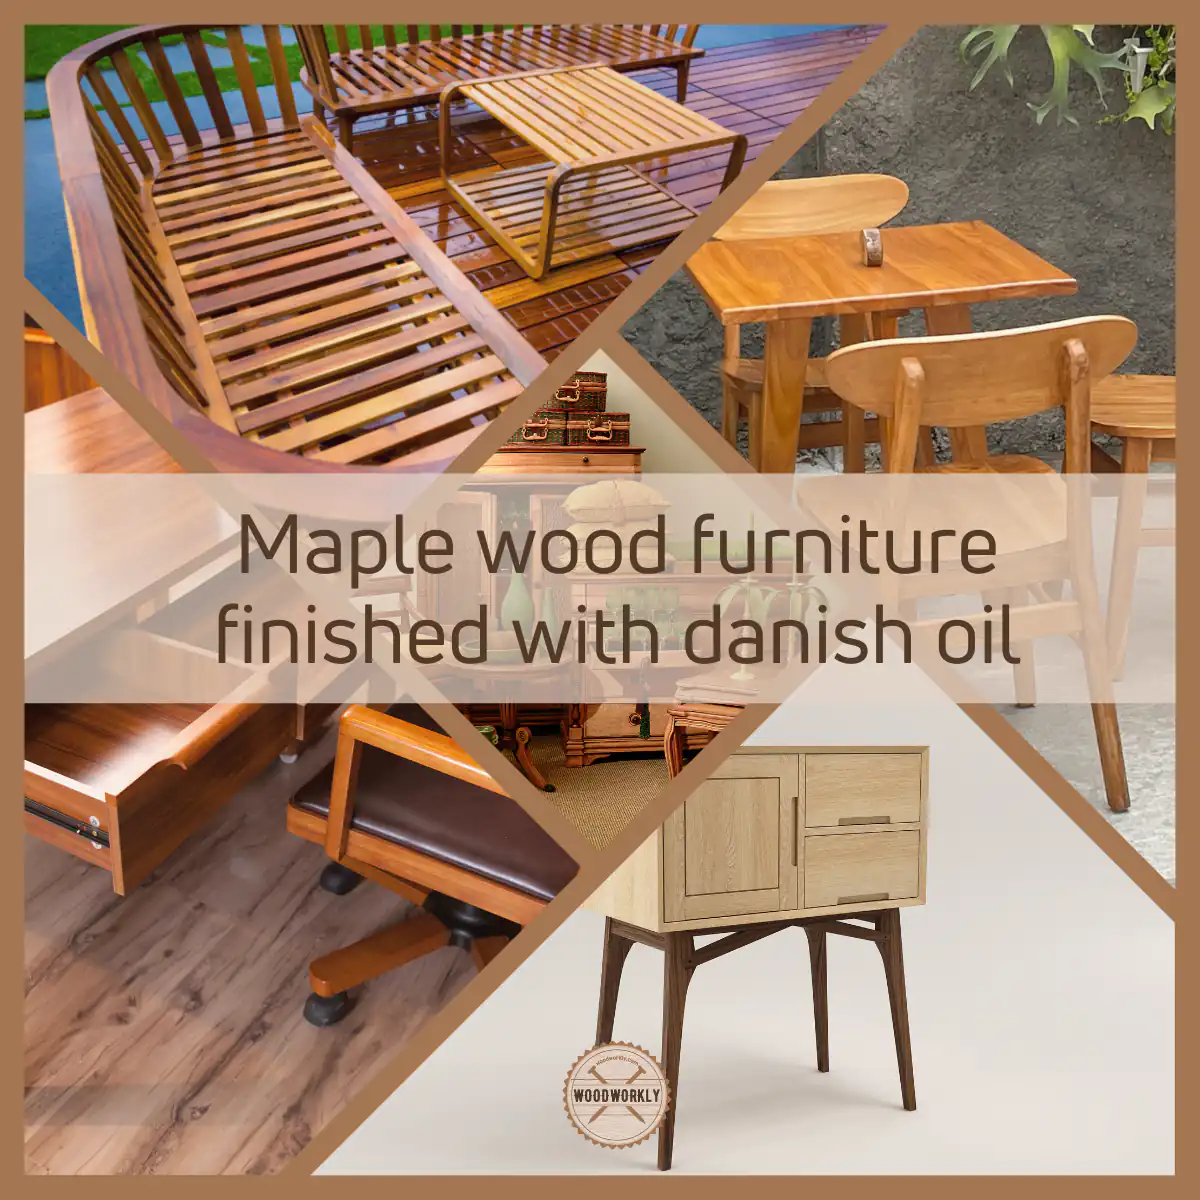 Danish oil on maple wood furniture